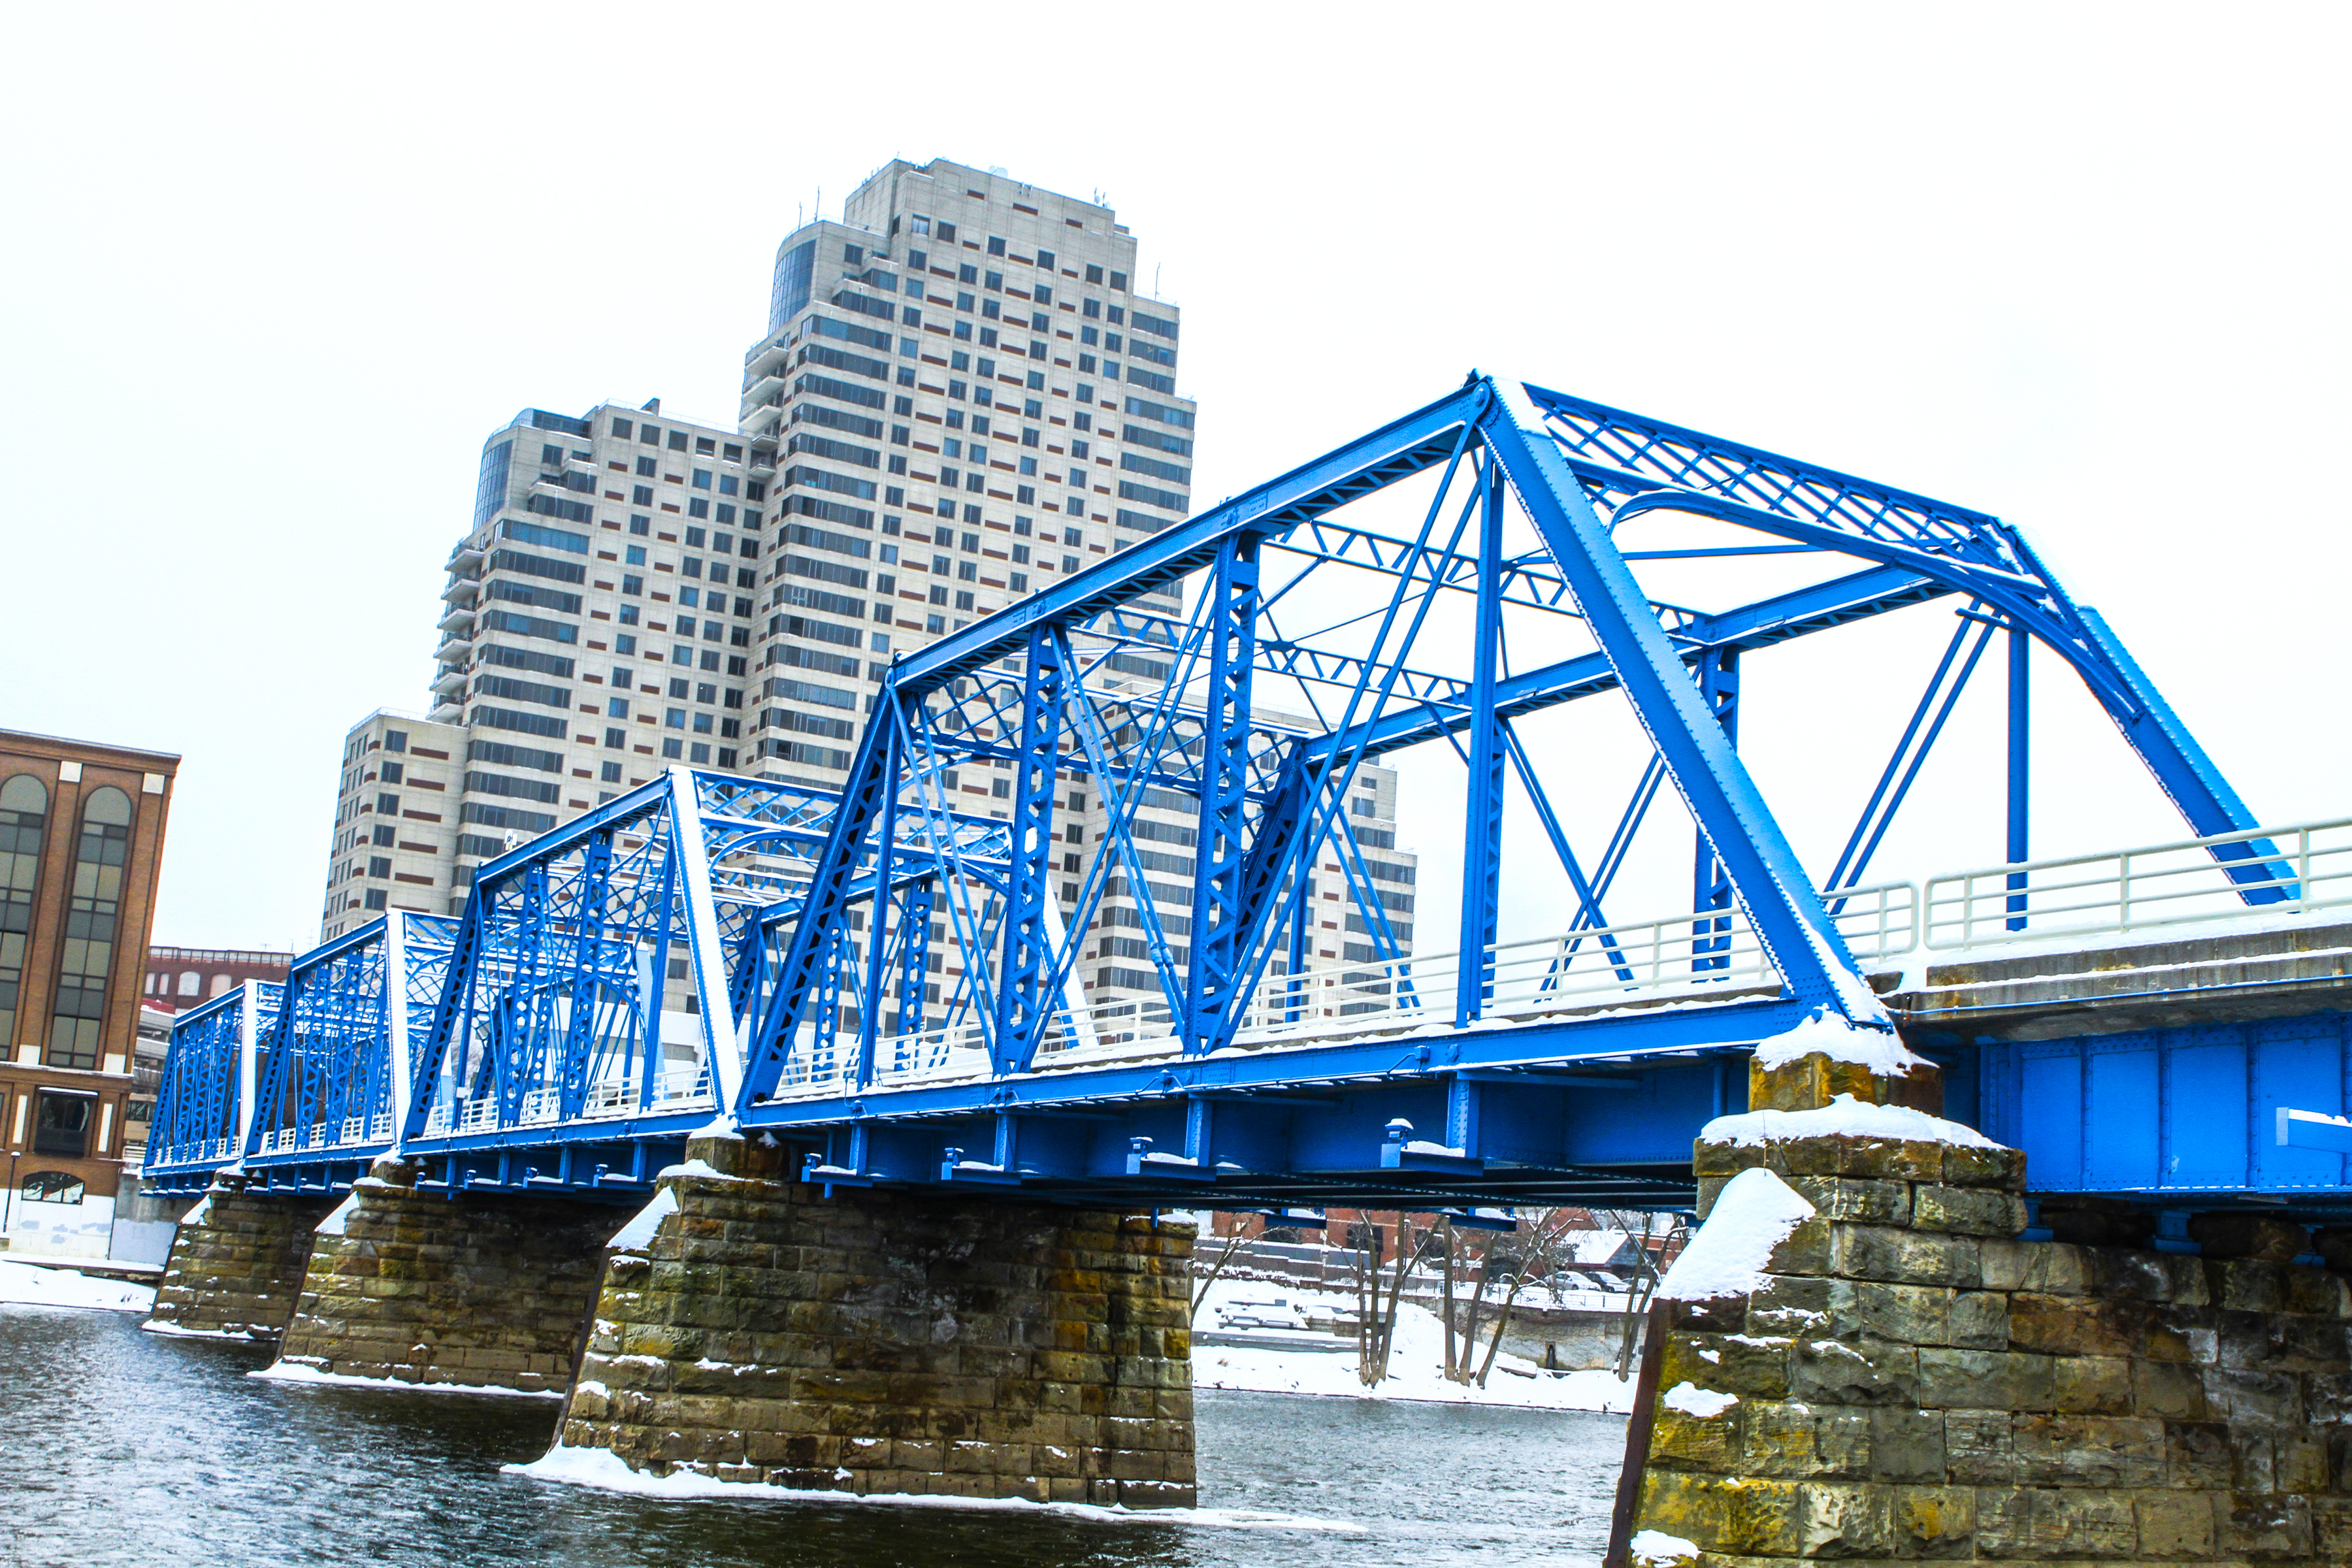 The Blue Bridge Grand Rapids Mi 49504.